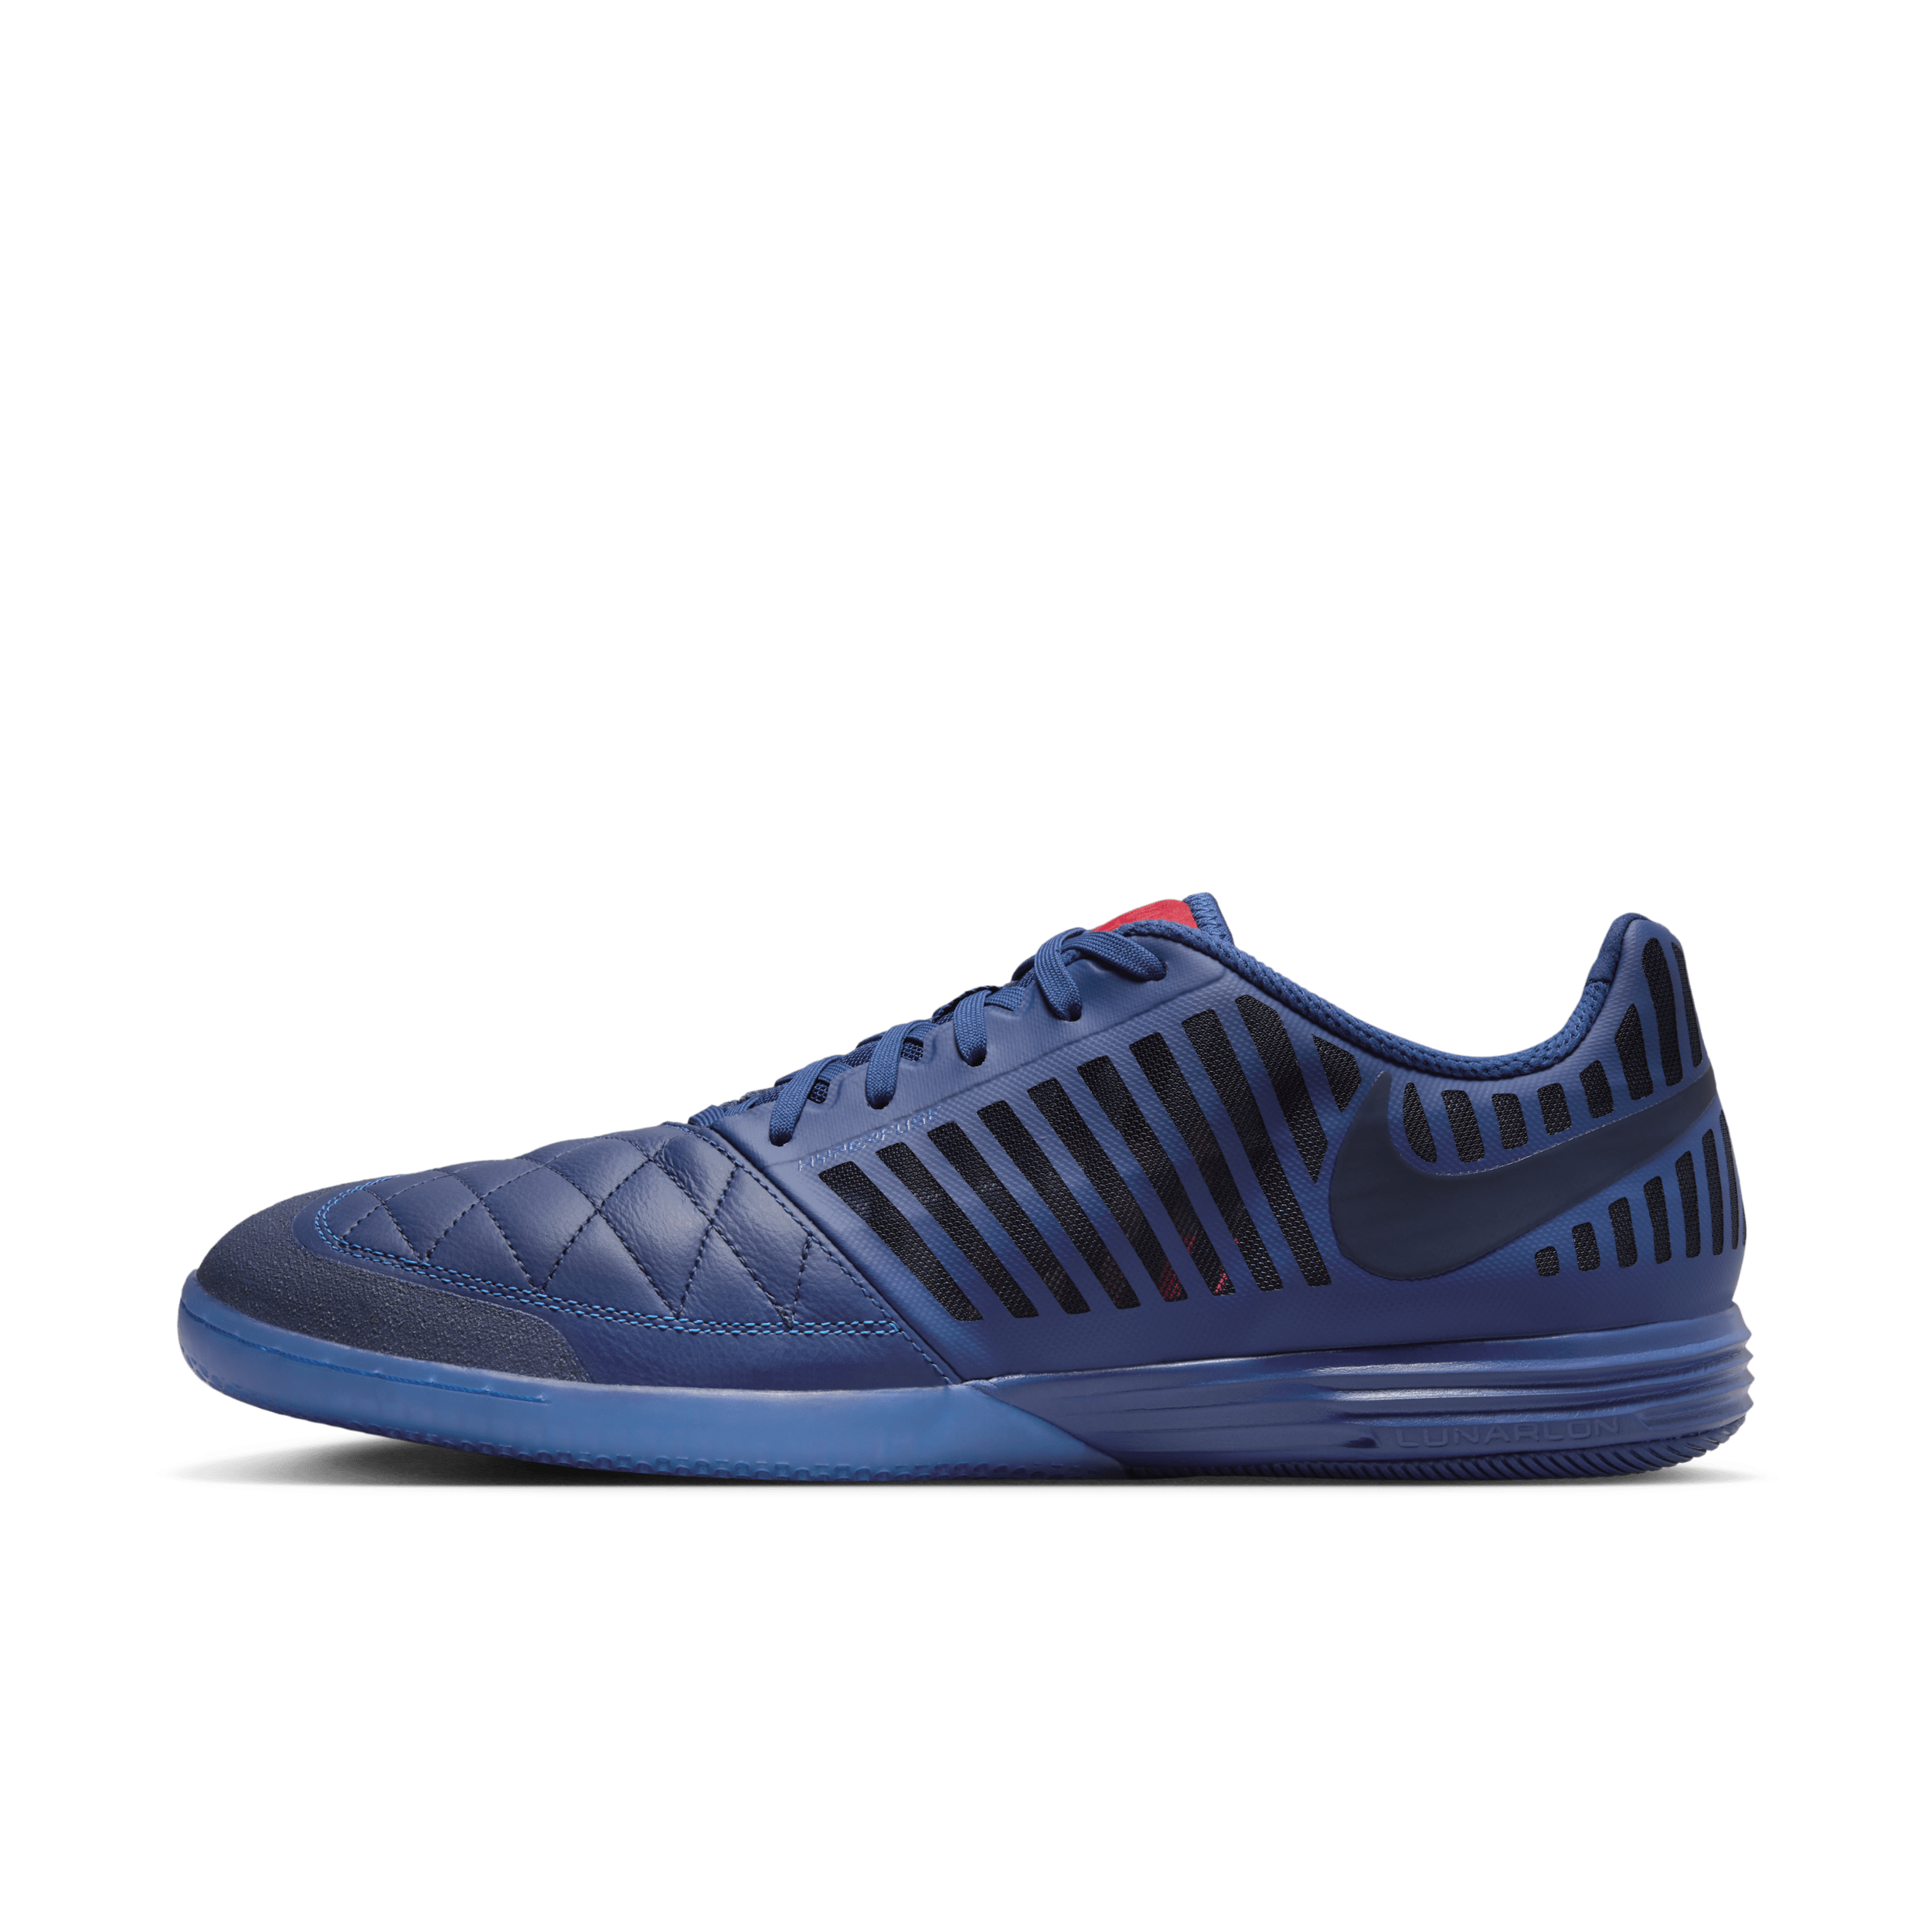 Nike Lunargato II Botas de fútbol sala de perfil bajo - Azul